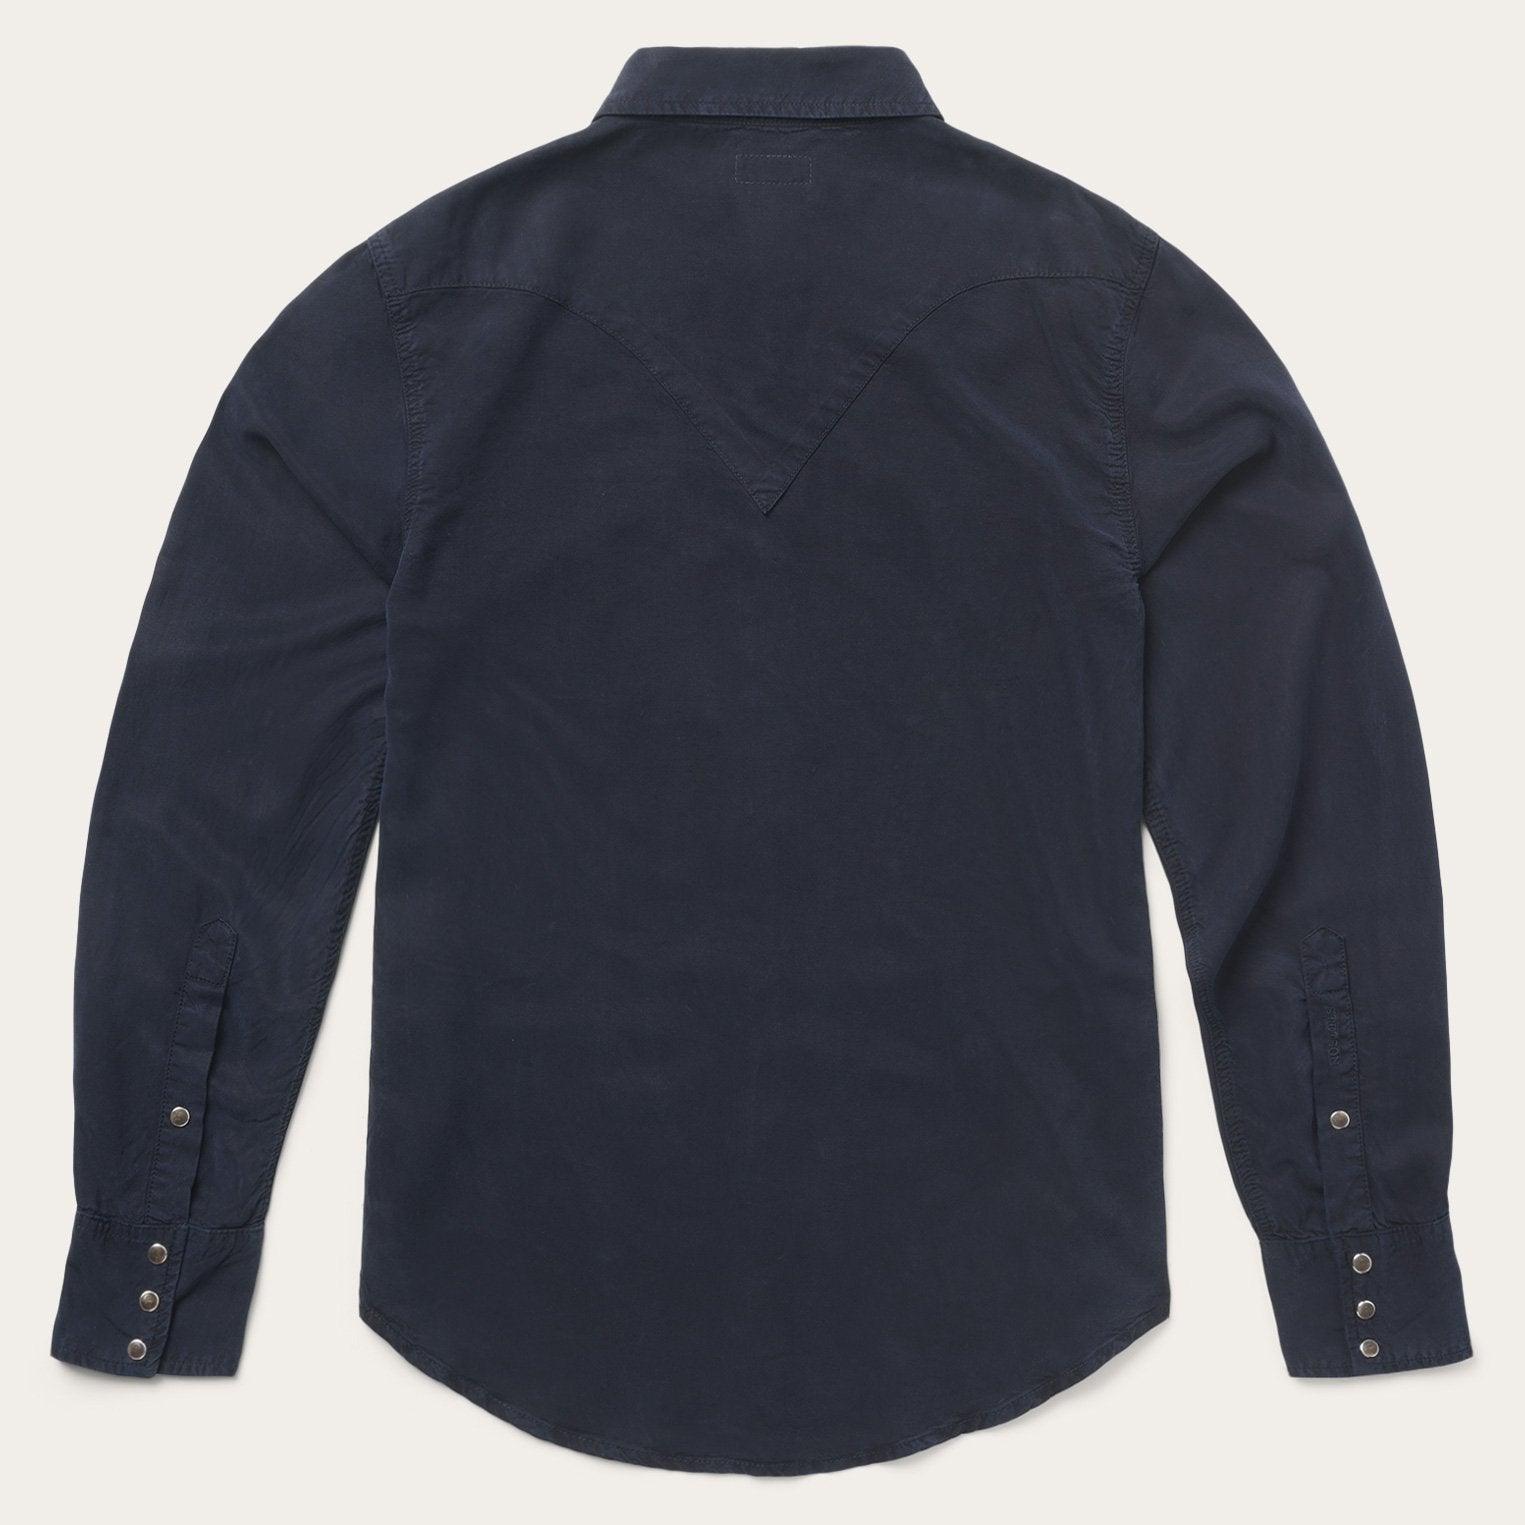 Stetson Navy Twill Shirt - Flyclothing LLC